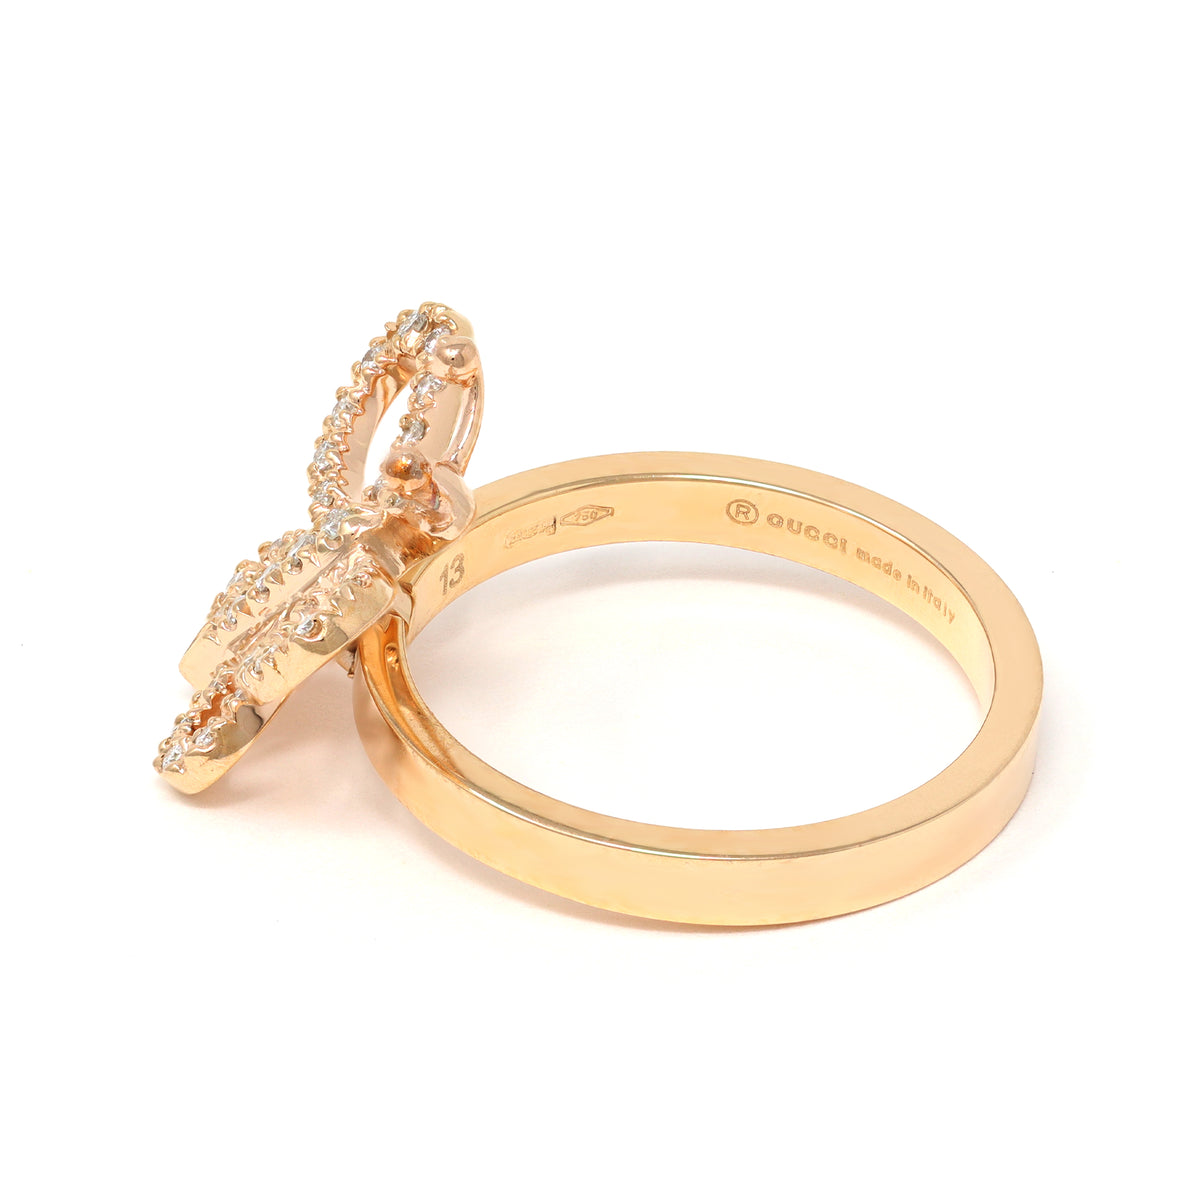 Gucci Flora Farfalla 18k Rose Gold Ring hallmarks view